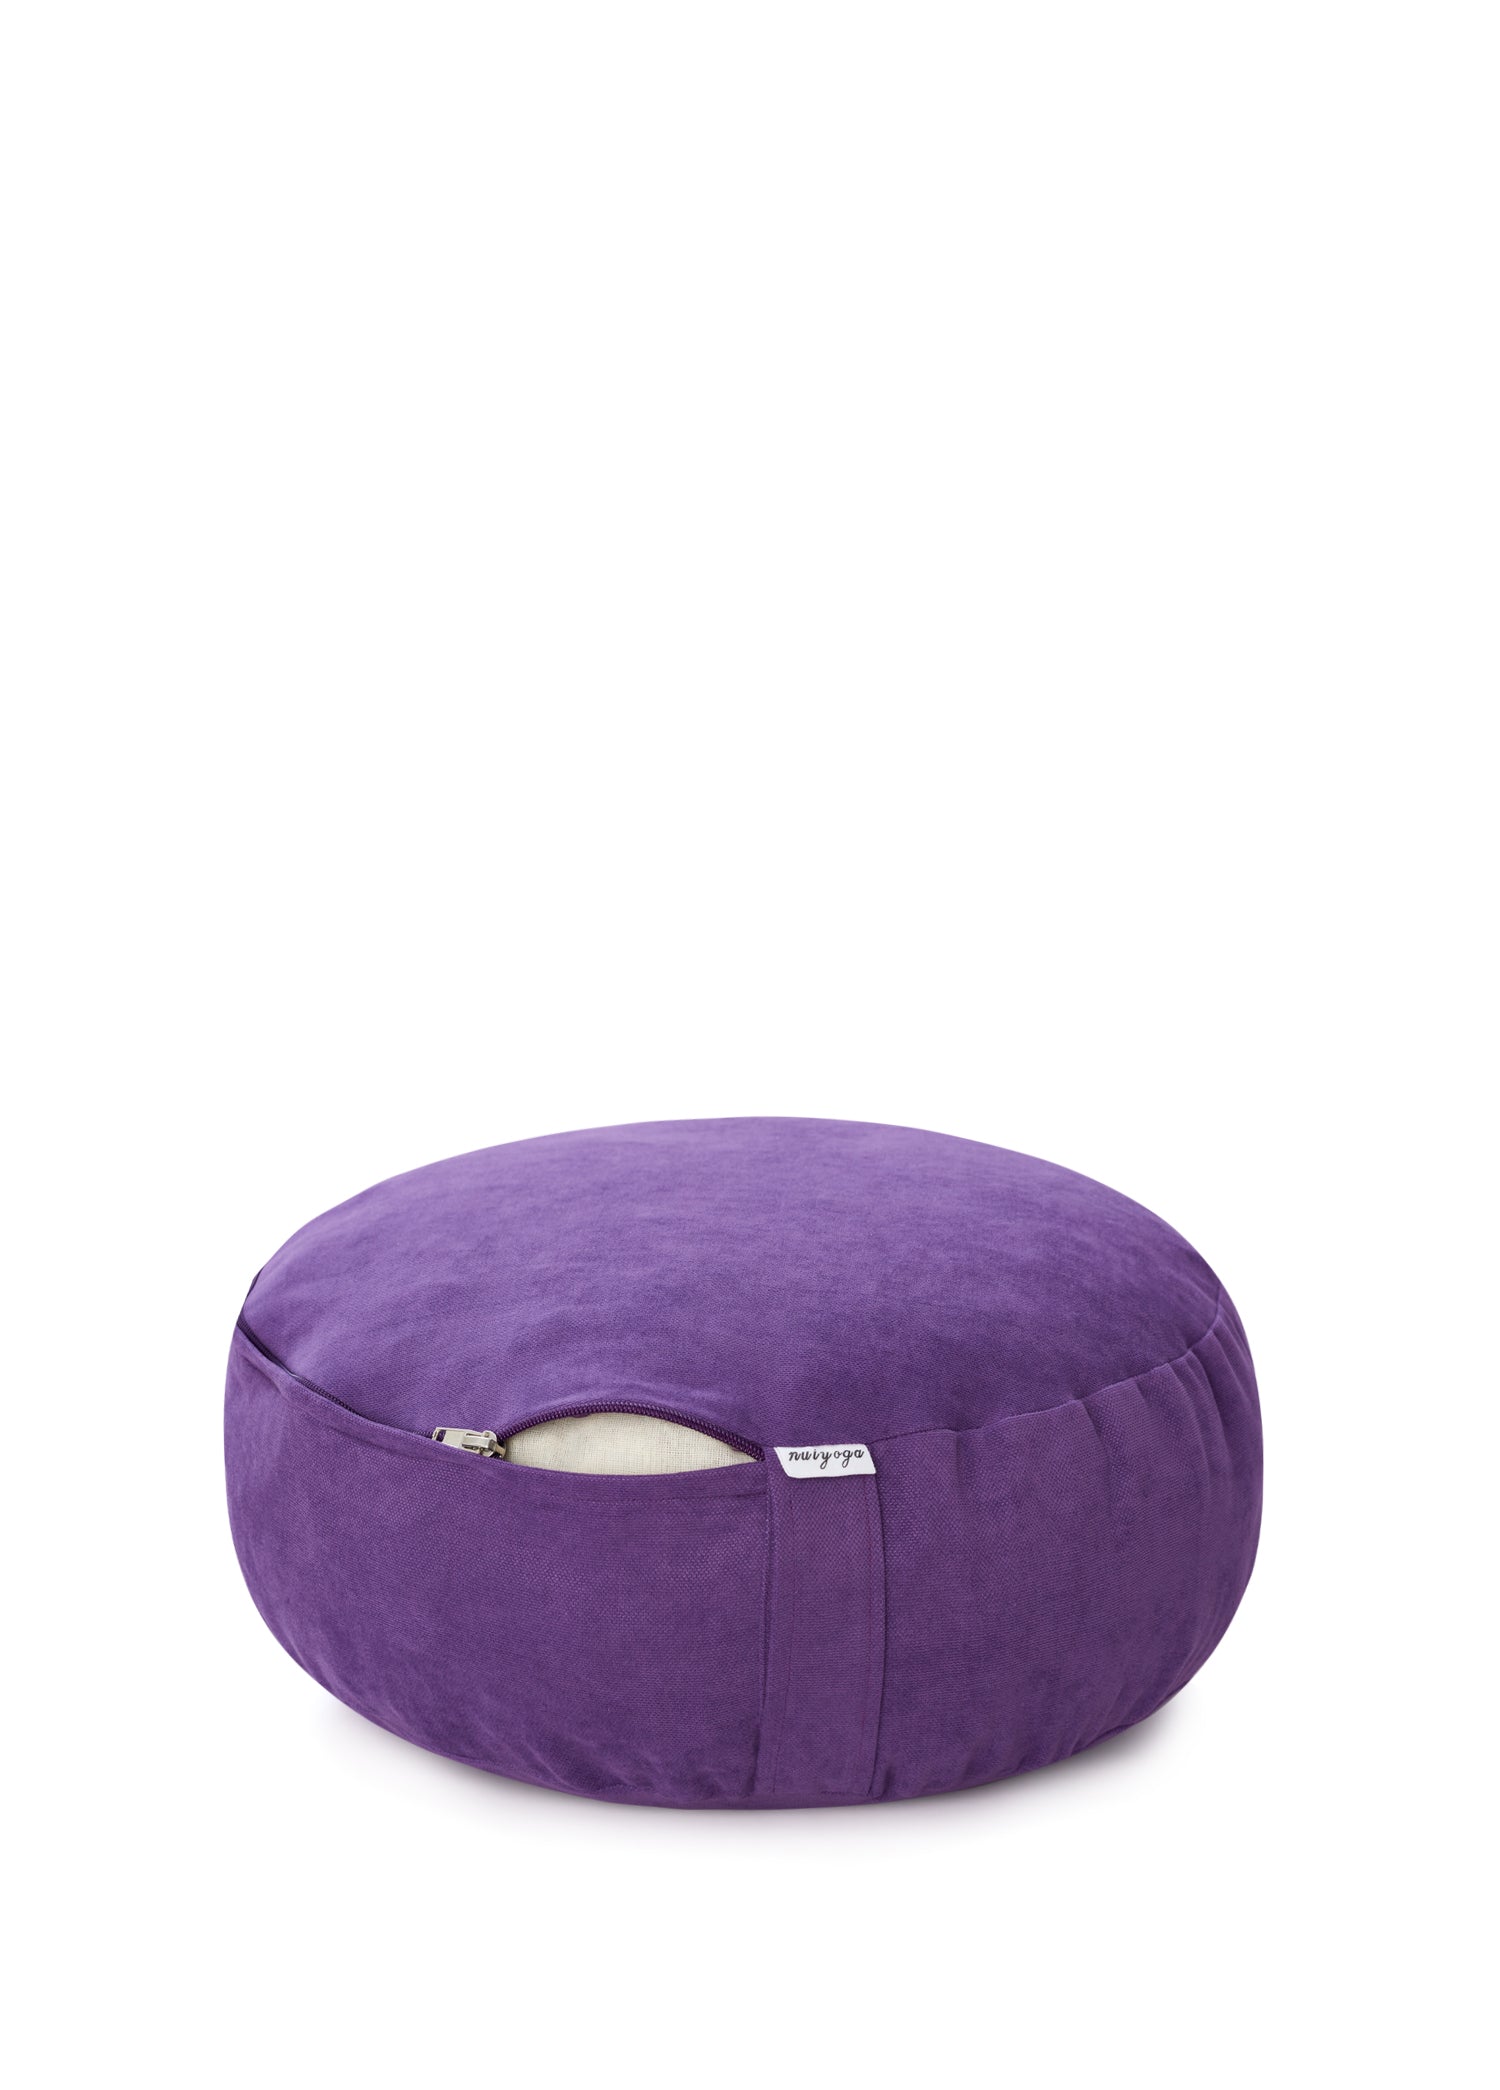 Purple Meditation Cushion 40 Cm Diameter